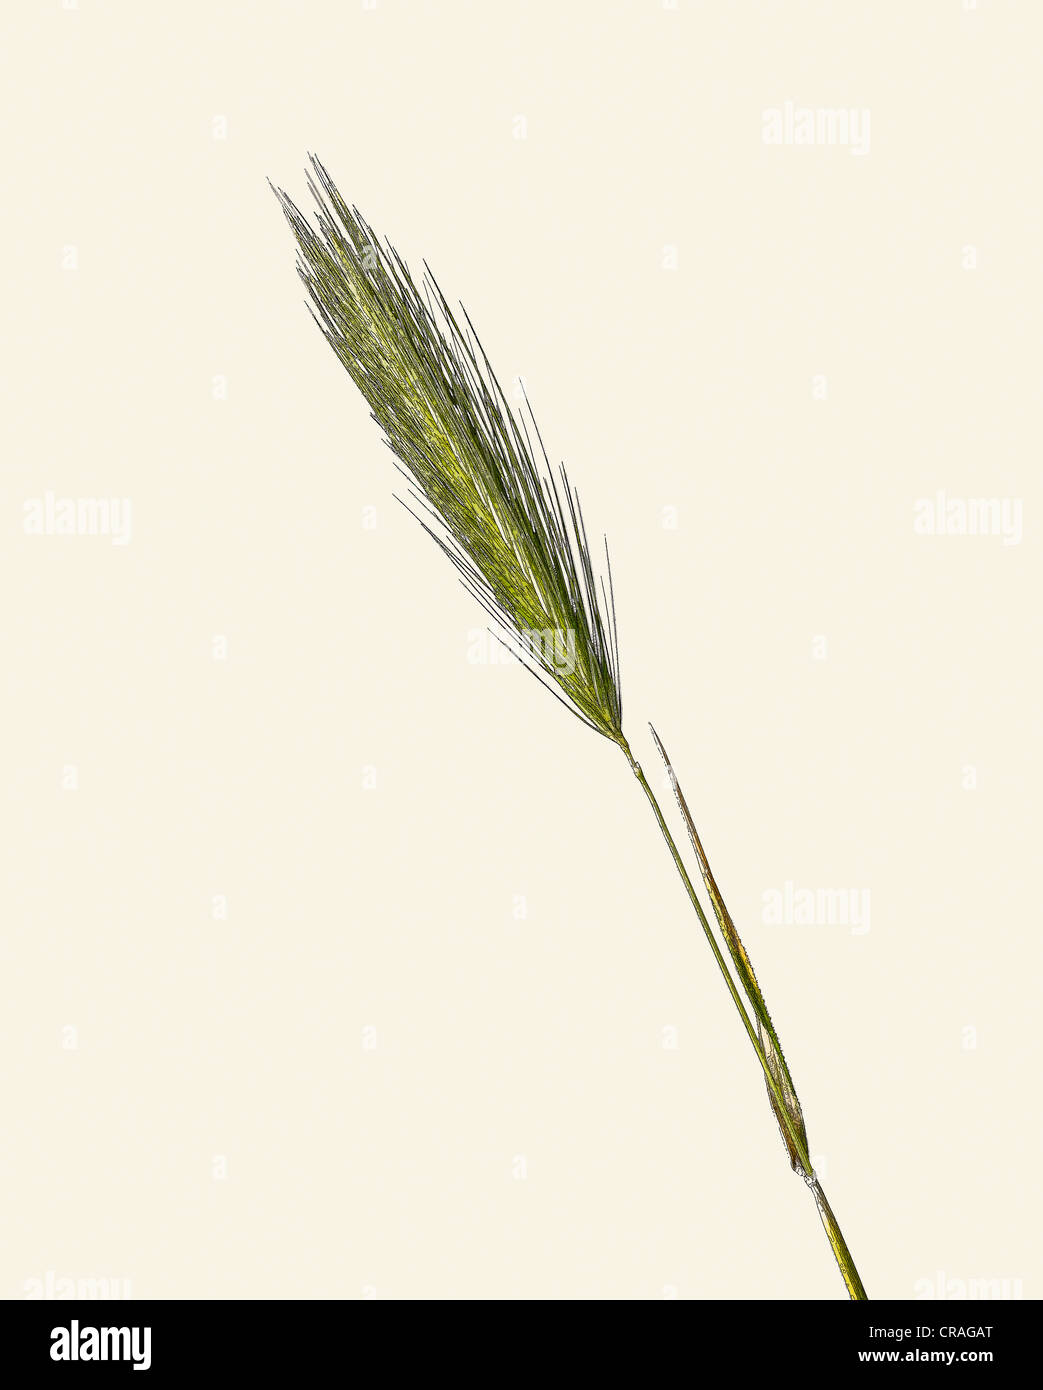 A Botanical illustration of a single stem of barley Stock Photo